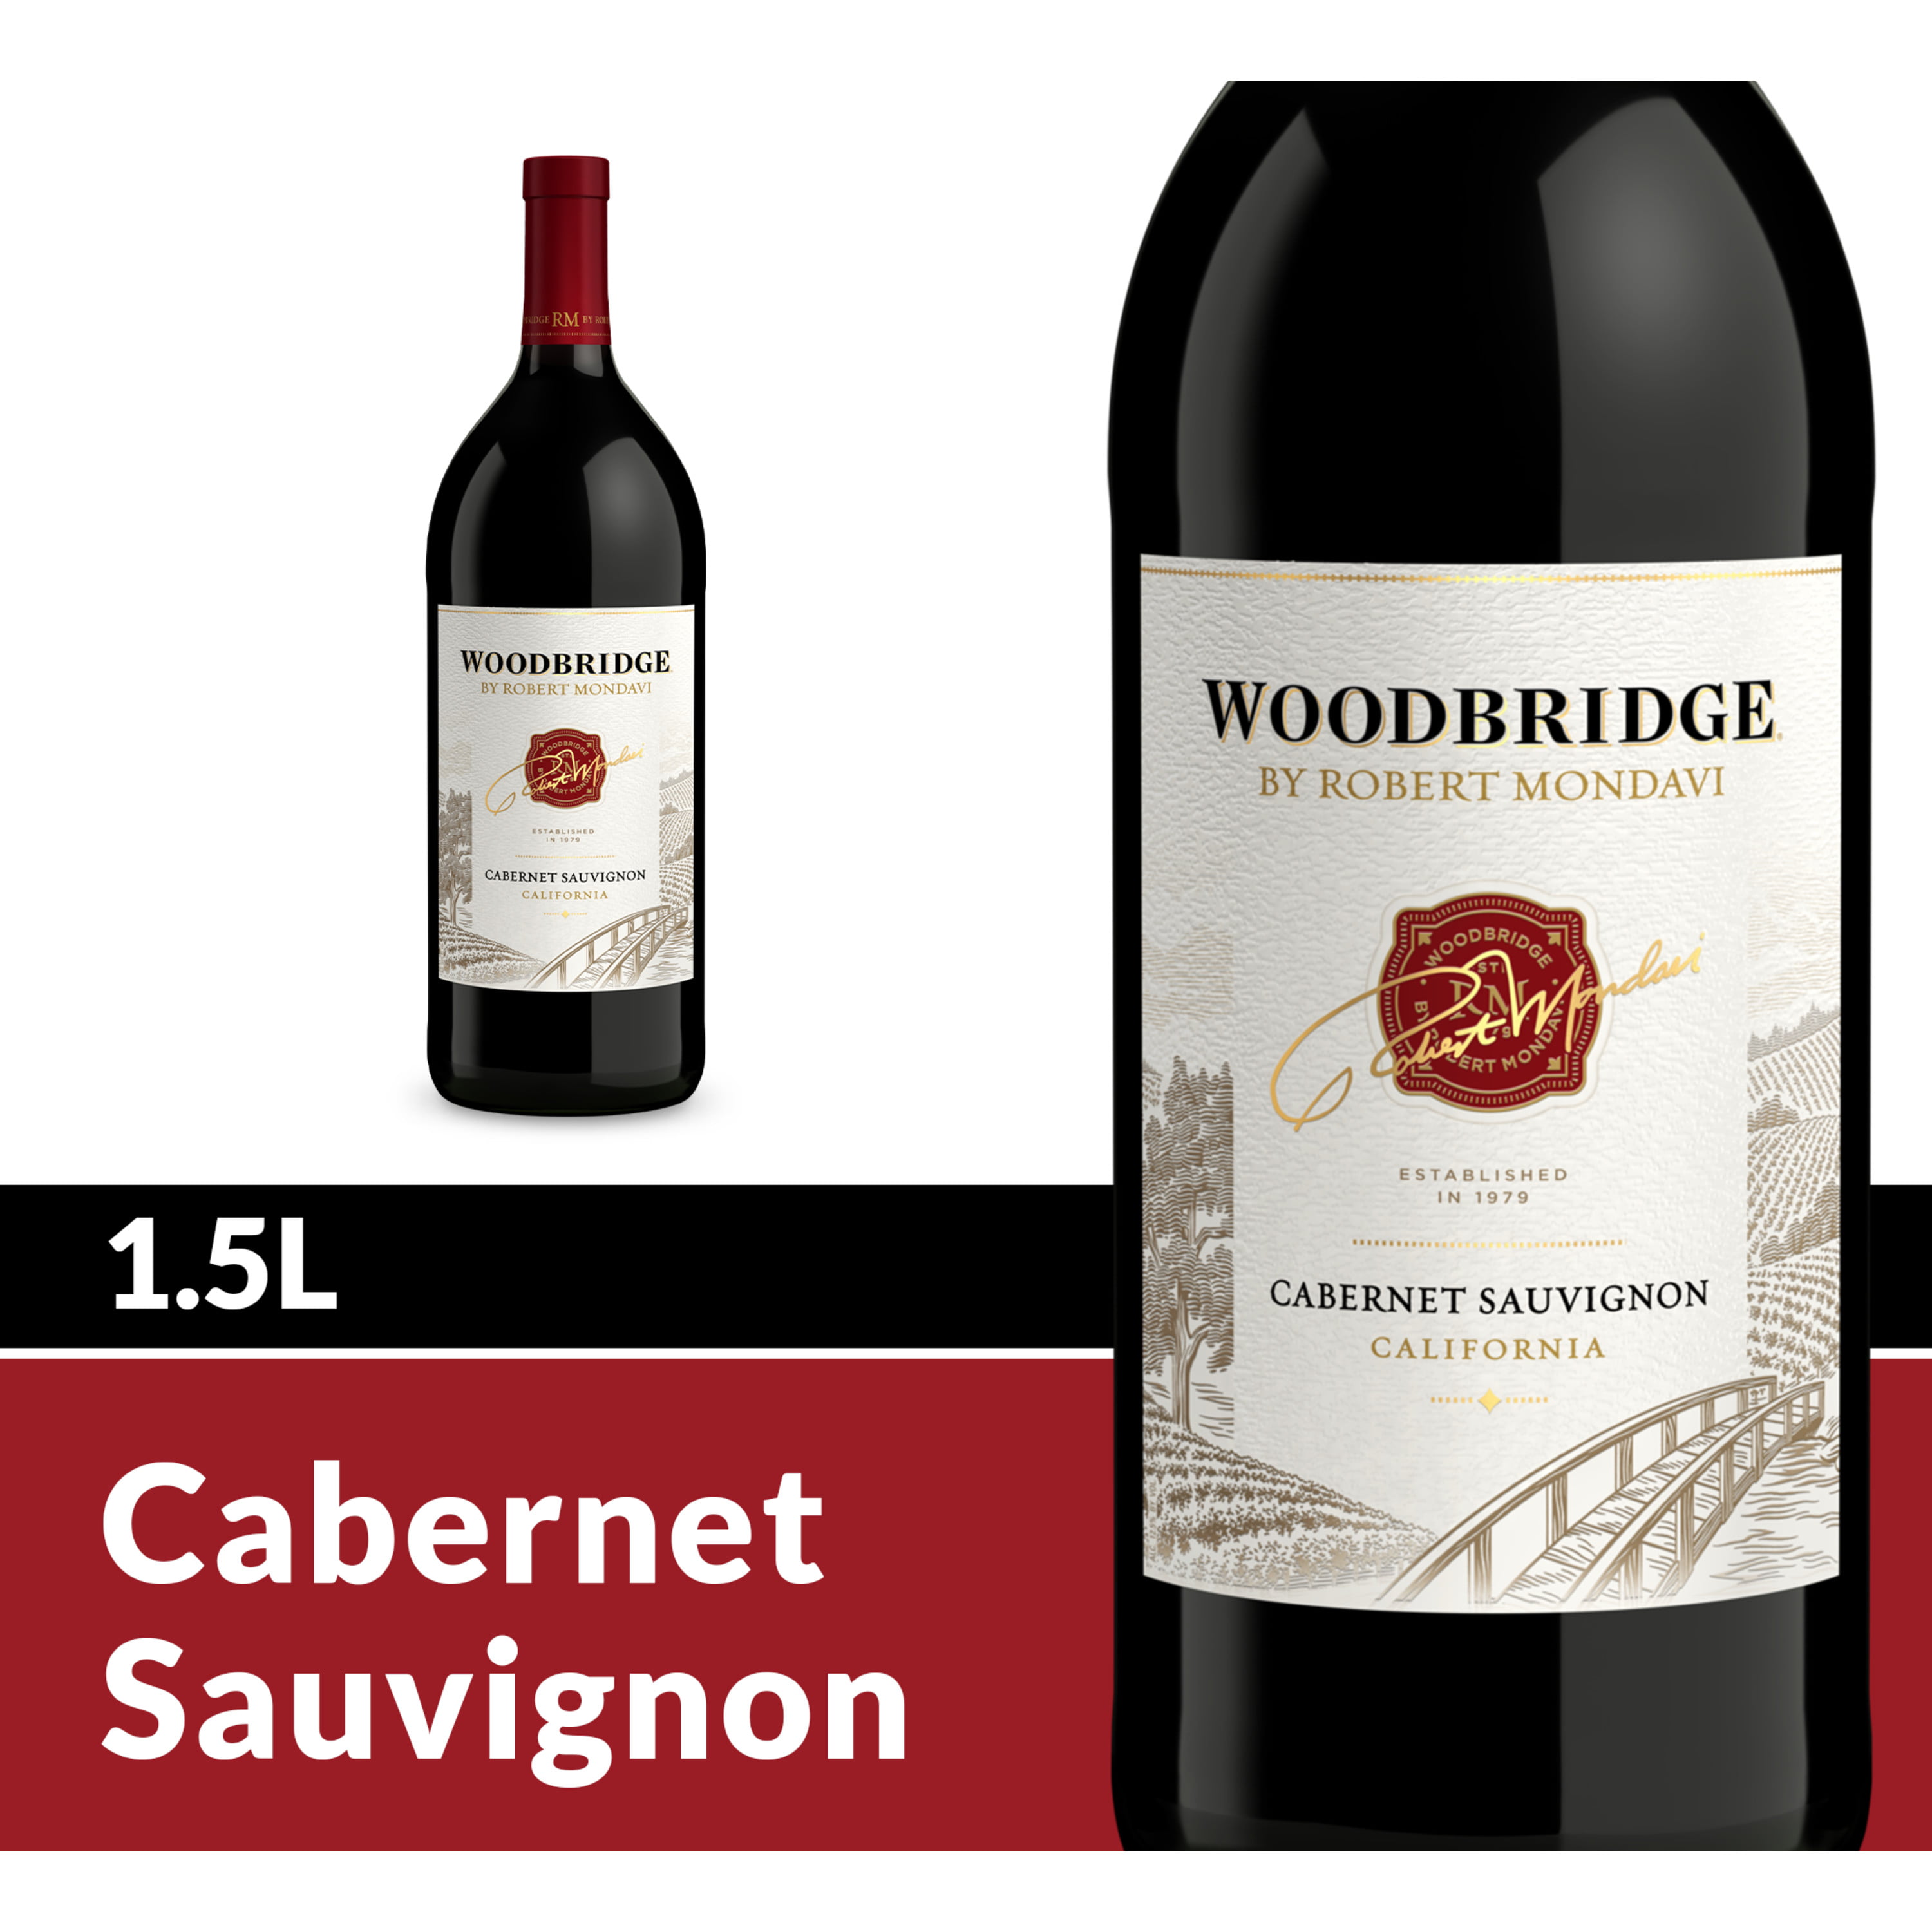 woodbridge-by-robert-mondavi-cabernet-sauvignon-red-wine-1-5-l-bottle